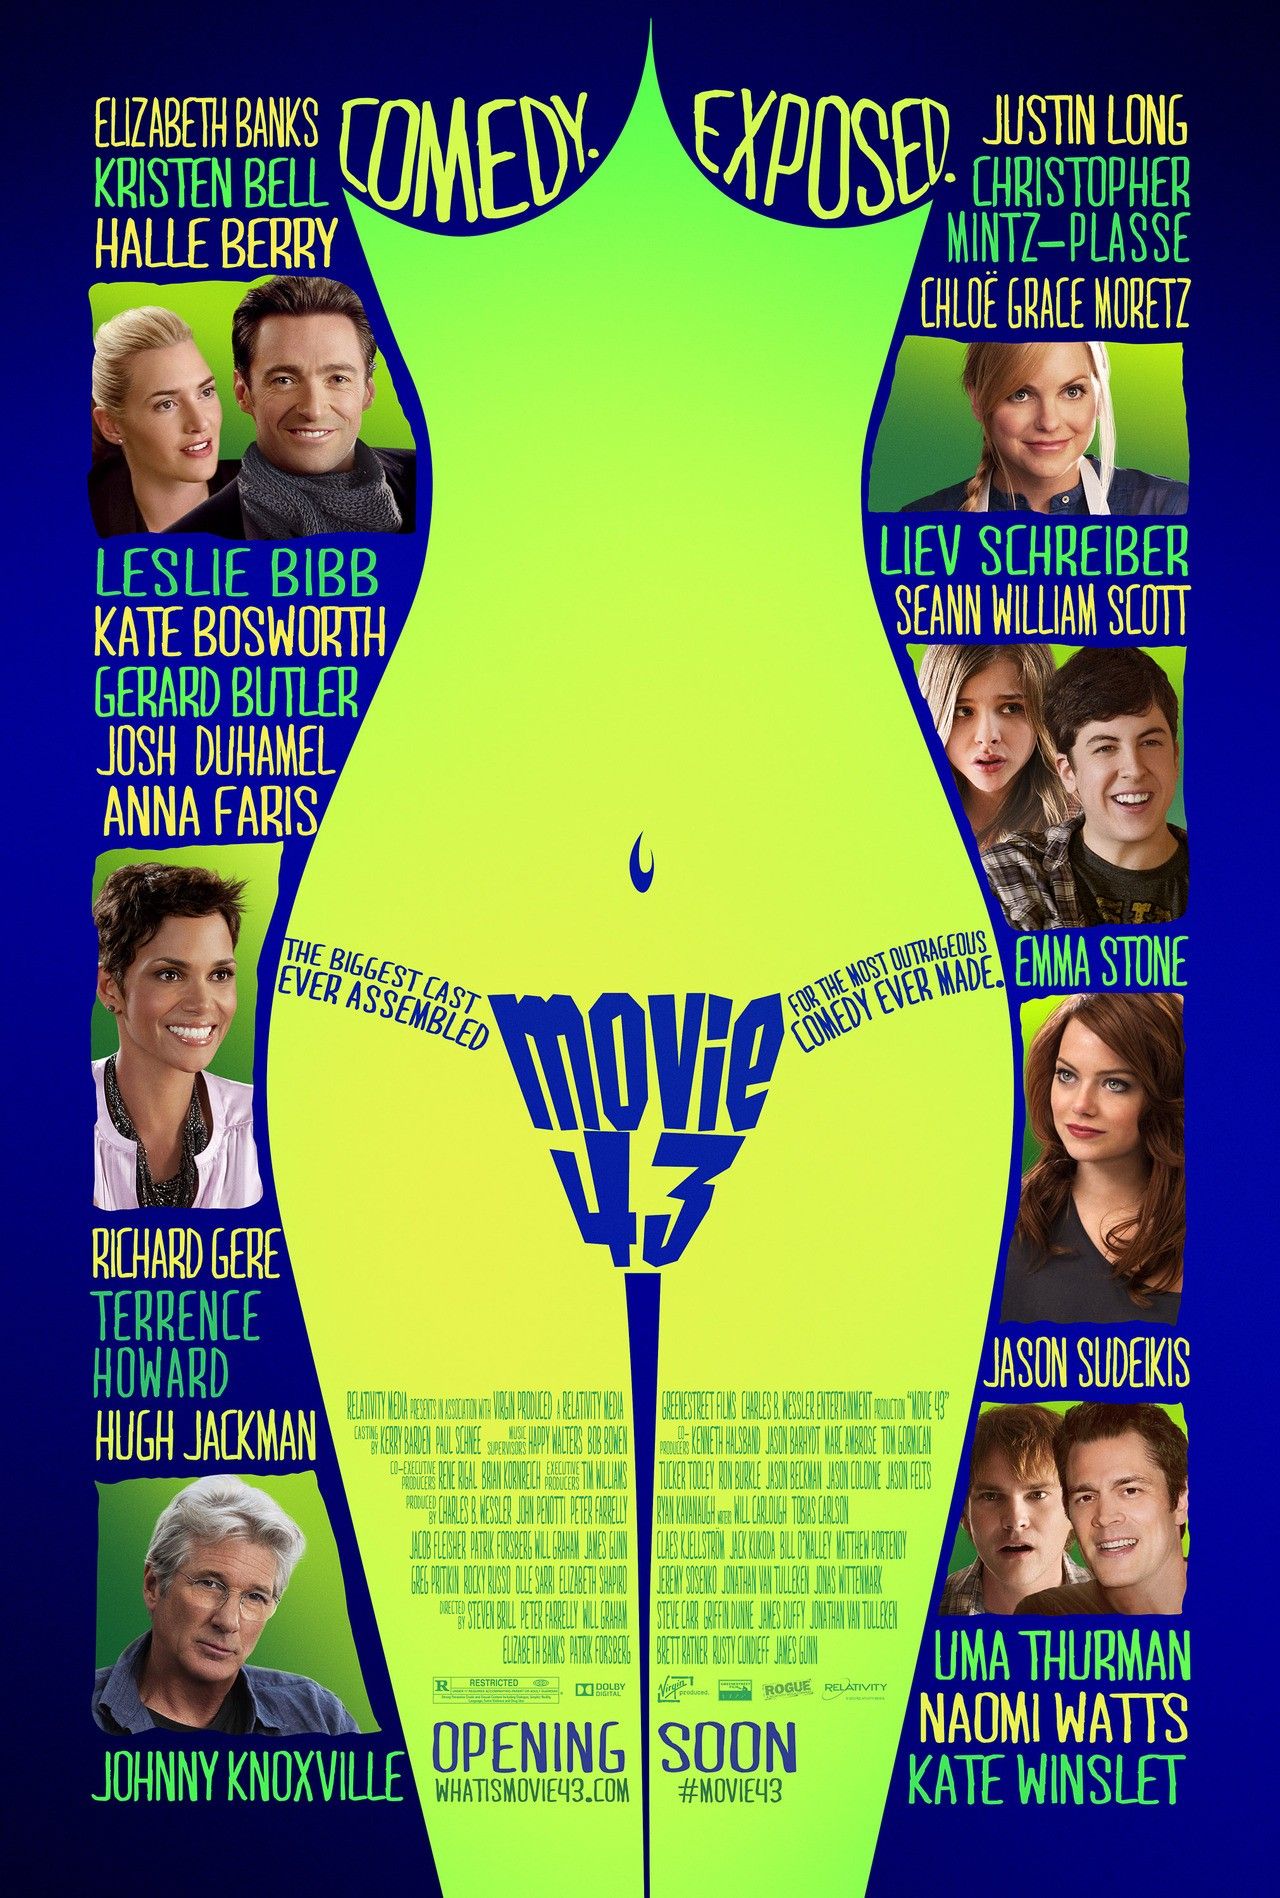 Poster of Relativity Media's Movie 43 (2013)